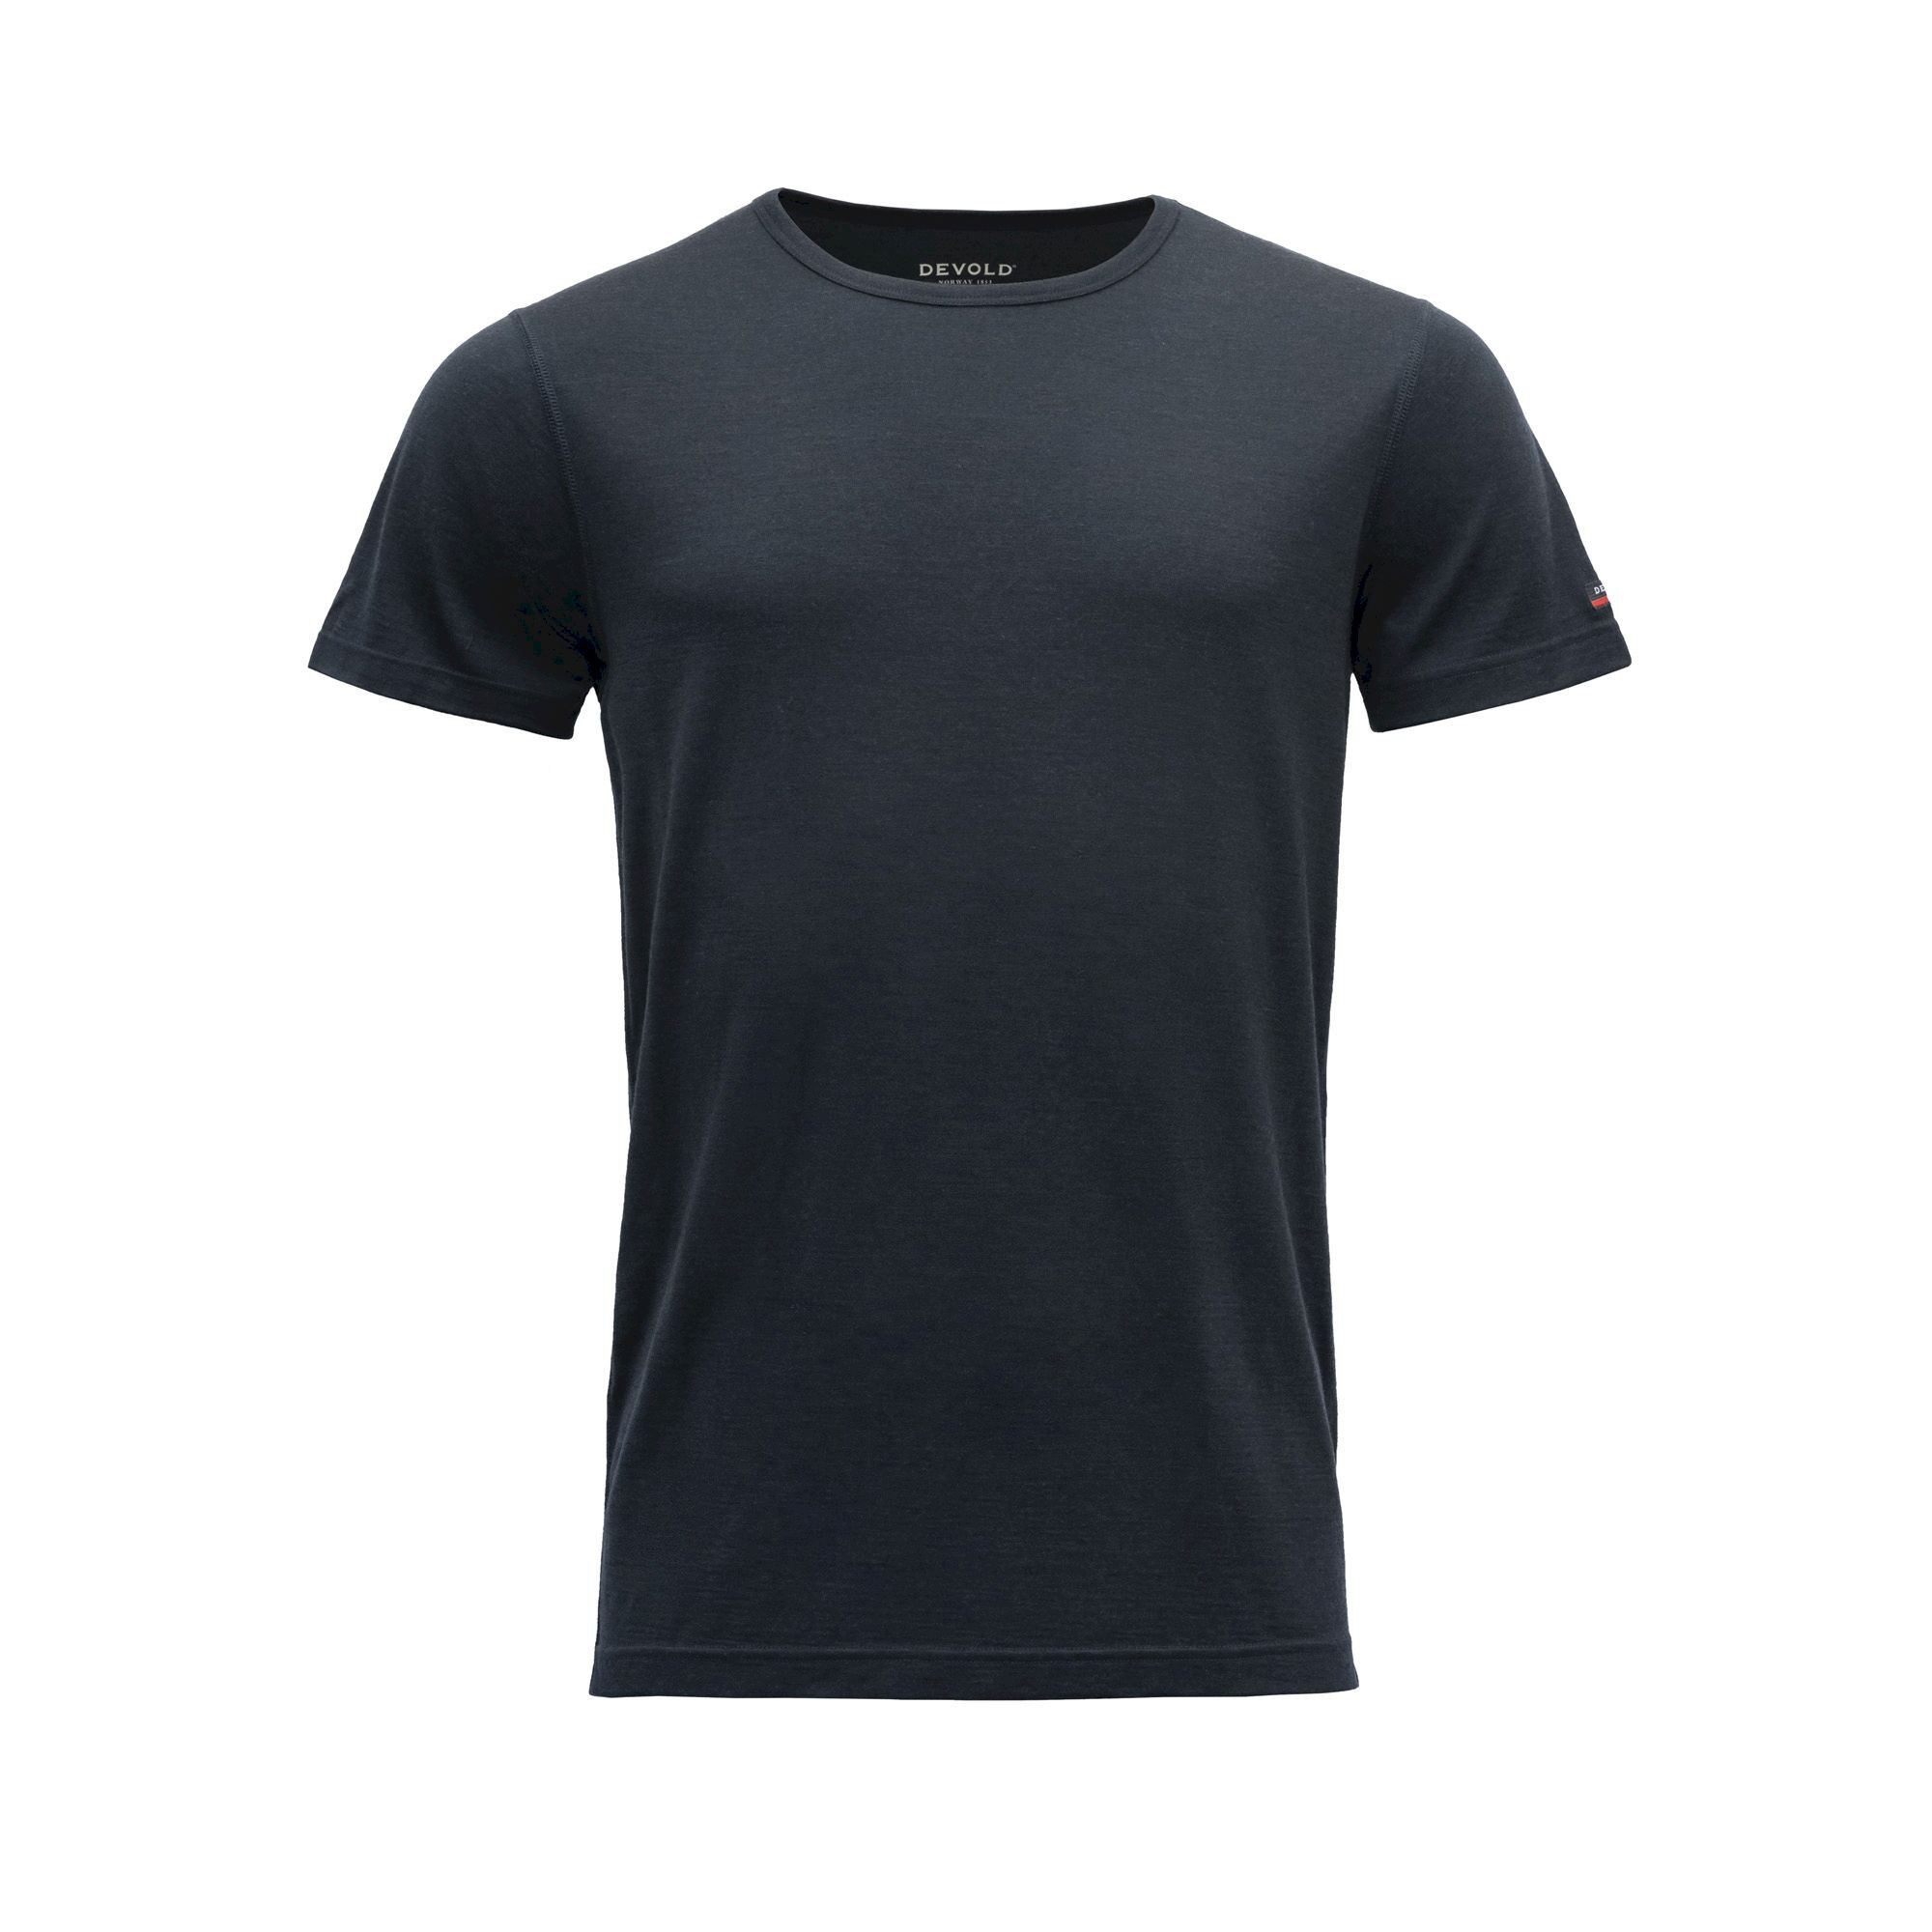 Devold Breeze - T-shirt - Uomo